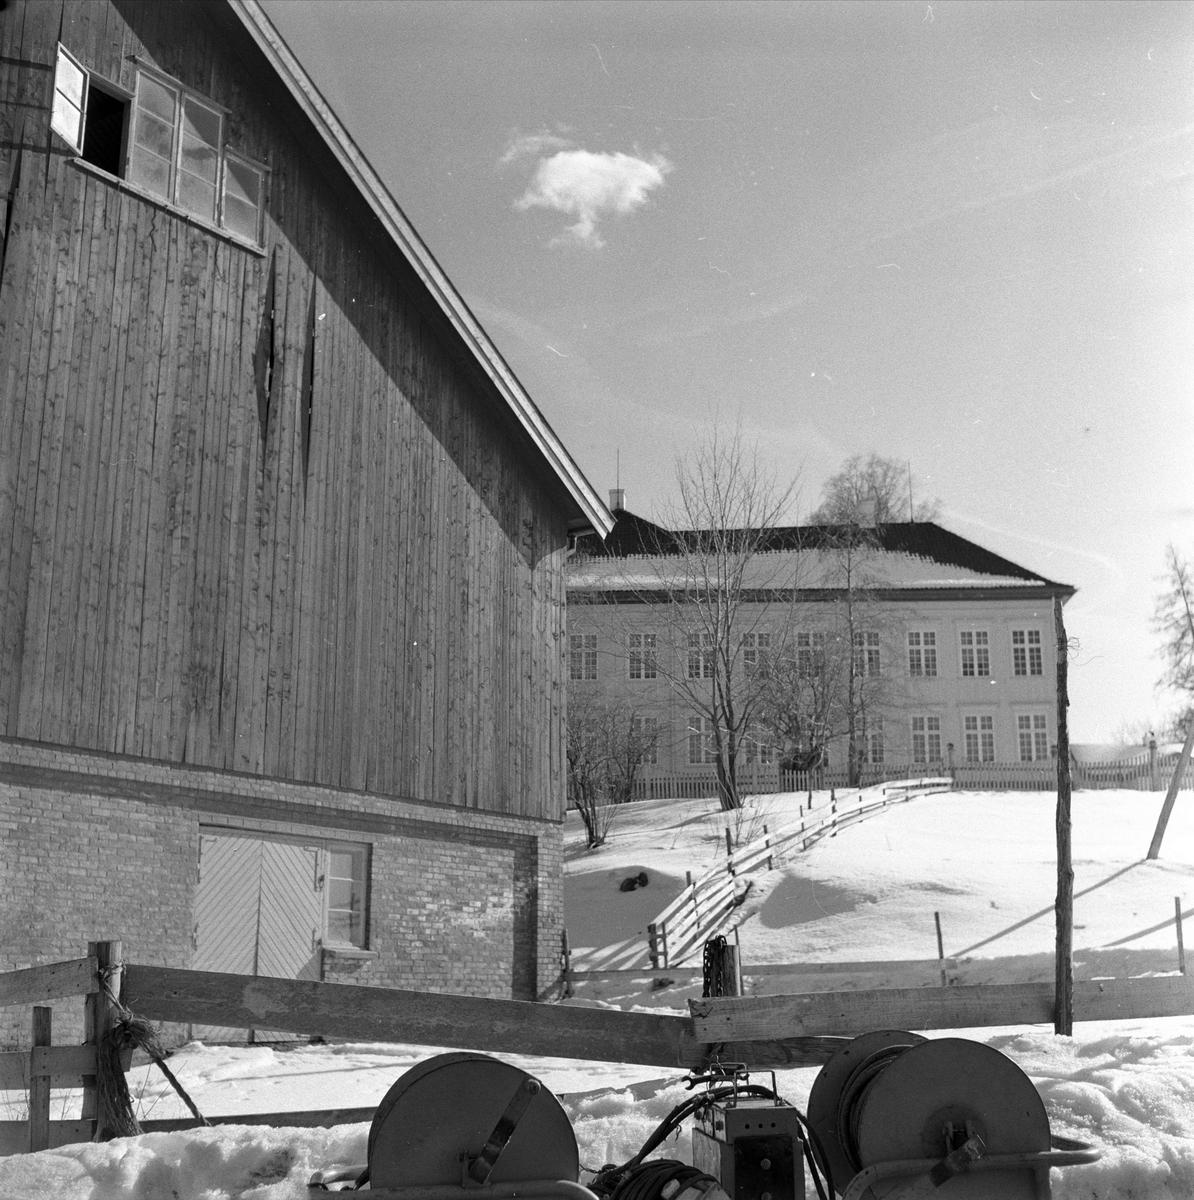 Eidsvollsbygningen, Eidsvoll, 08.04.1958. Sett bak uthus. Vinter.